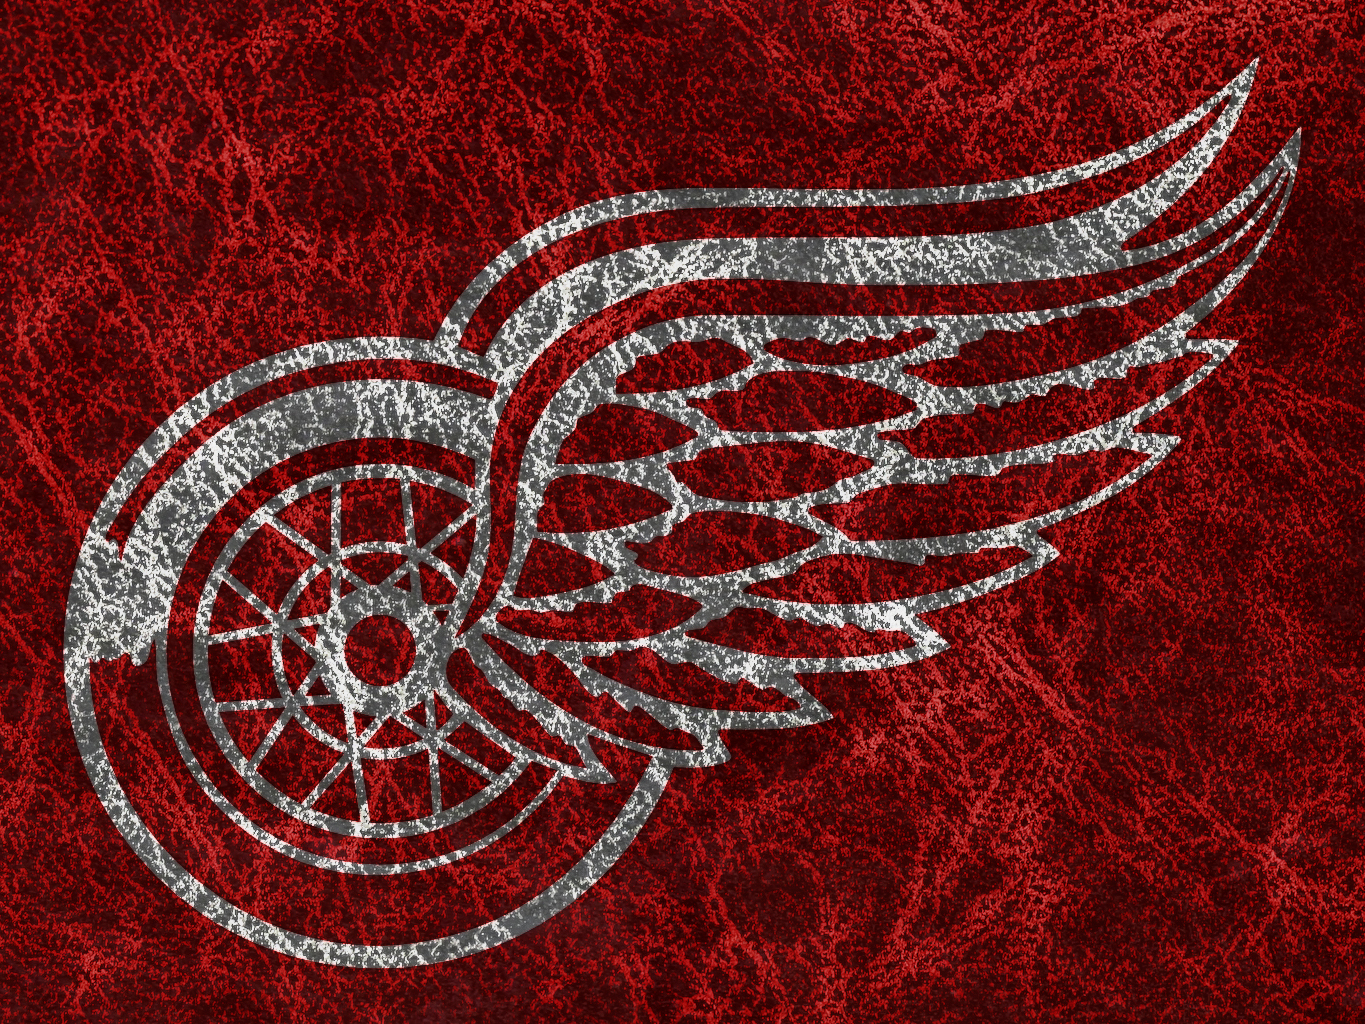 Detroit Red Wings By Corvuscorax92